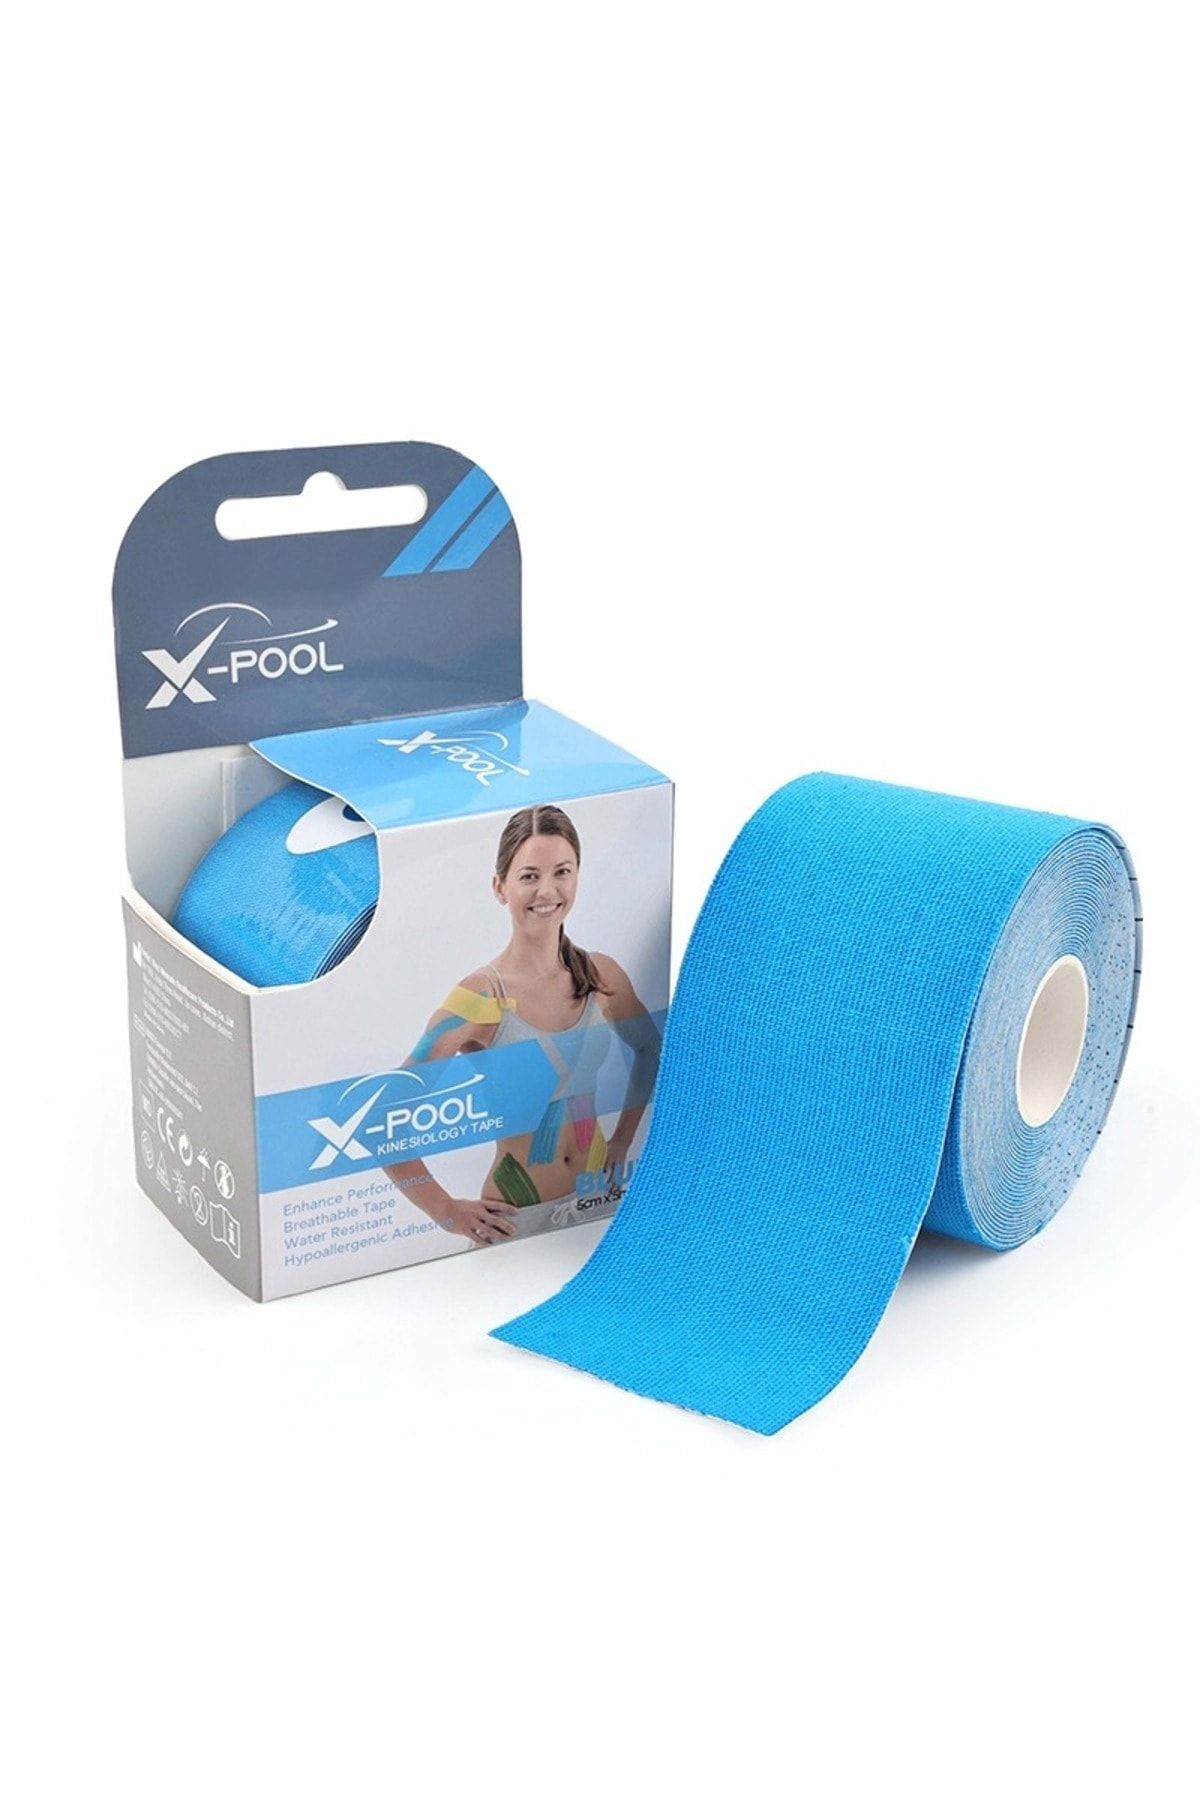 FİZYOPOL X Pool Kinesiology Tape Gold 5x5 Cm Ağrı Bandı Mavi Renk